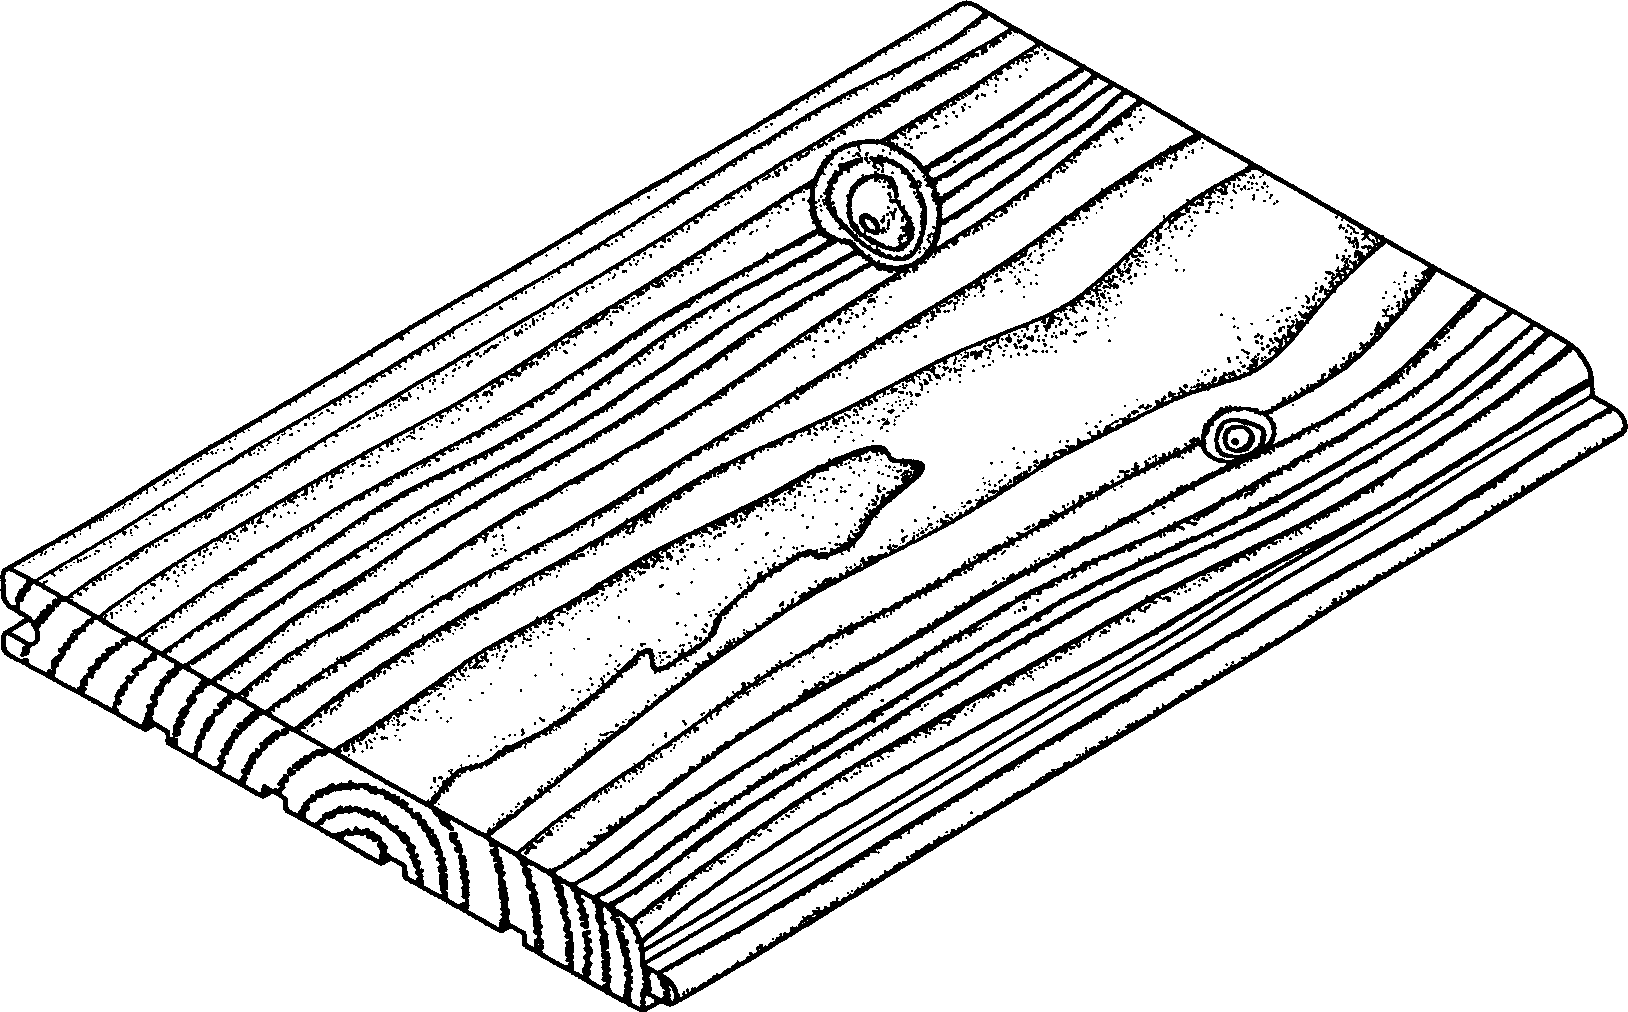 Manufacturing method of plane baked vein board